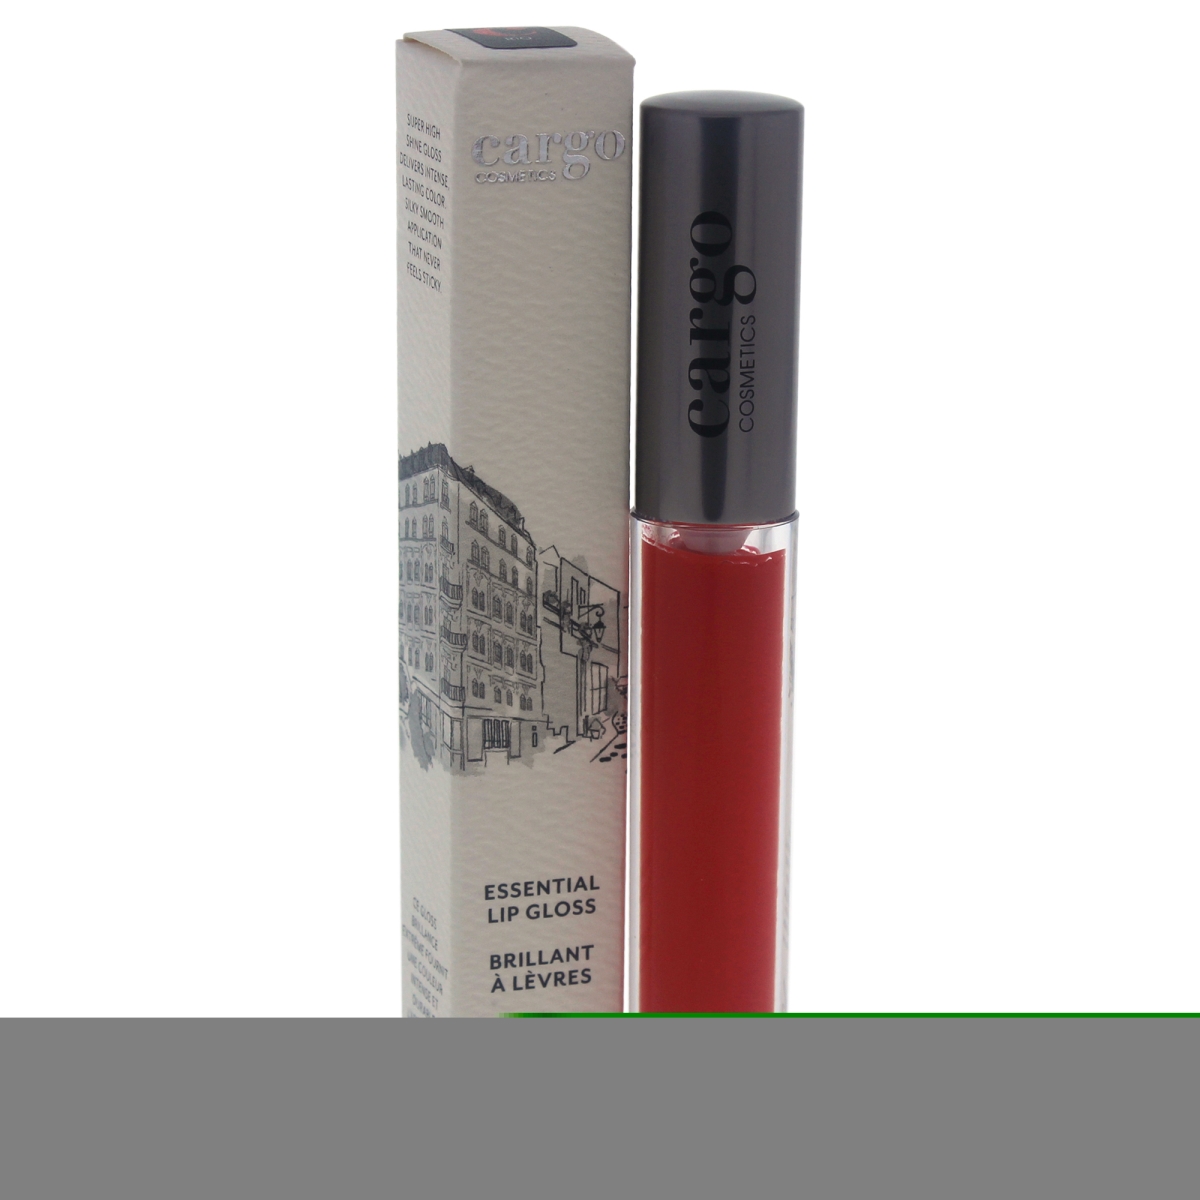 W-c-12075 Essential Lip Gloss - Rio For Women - 0.08 Oz